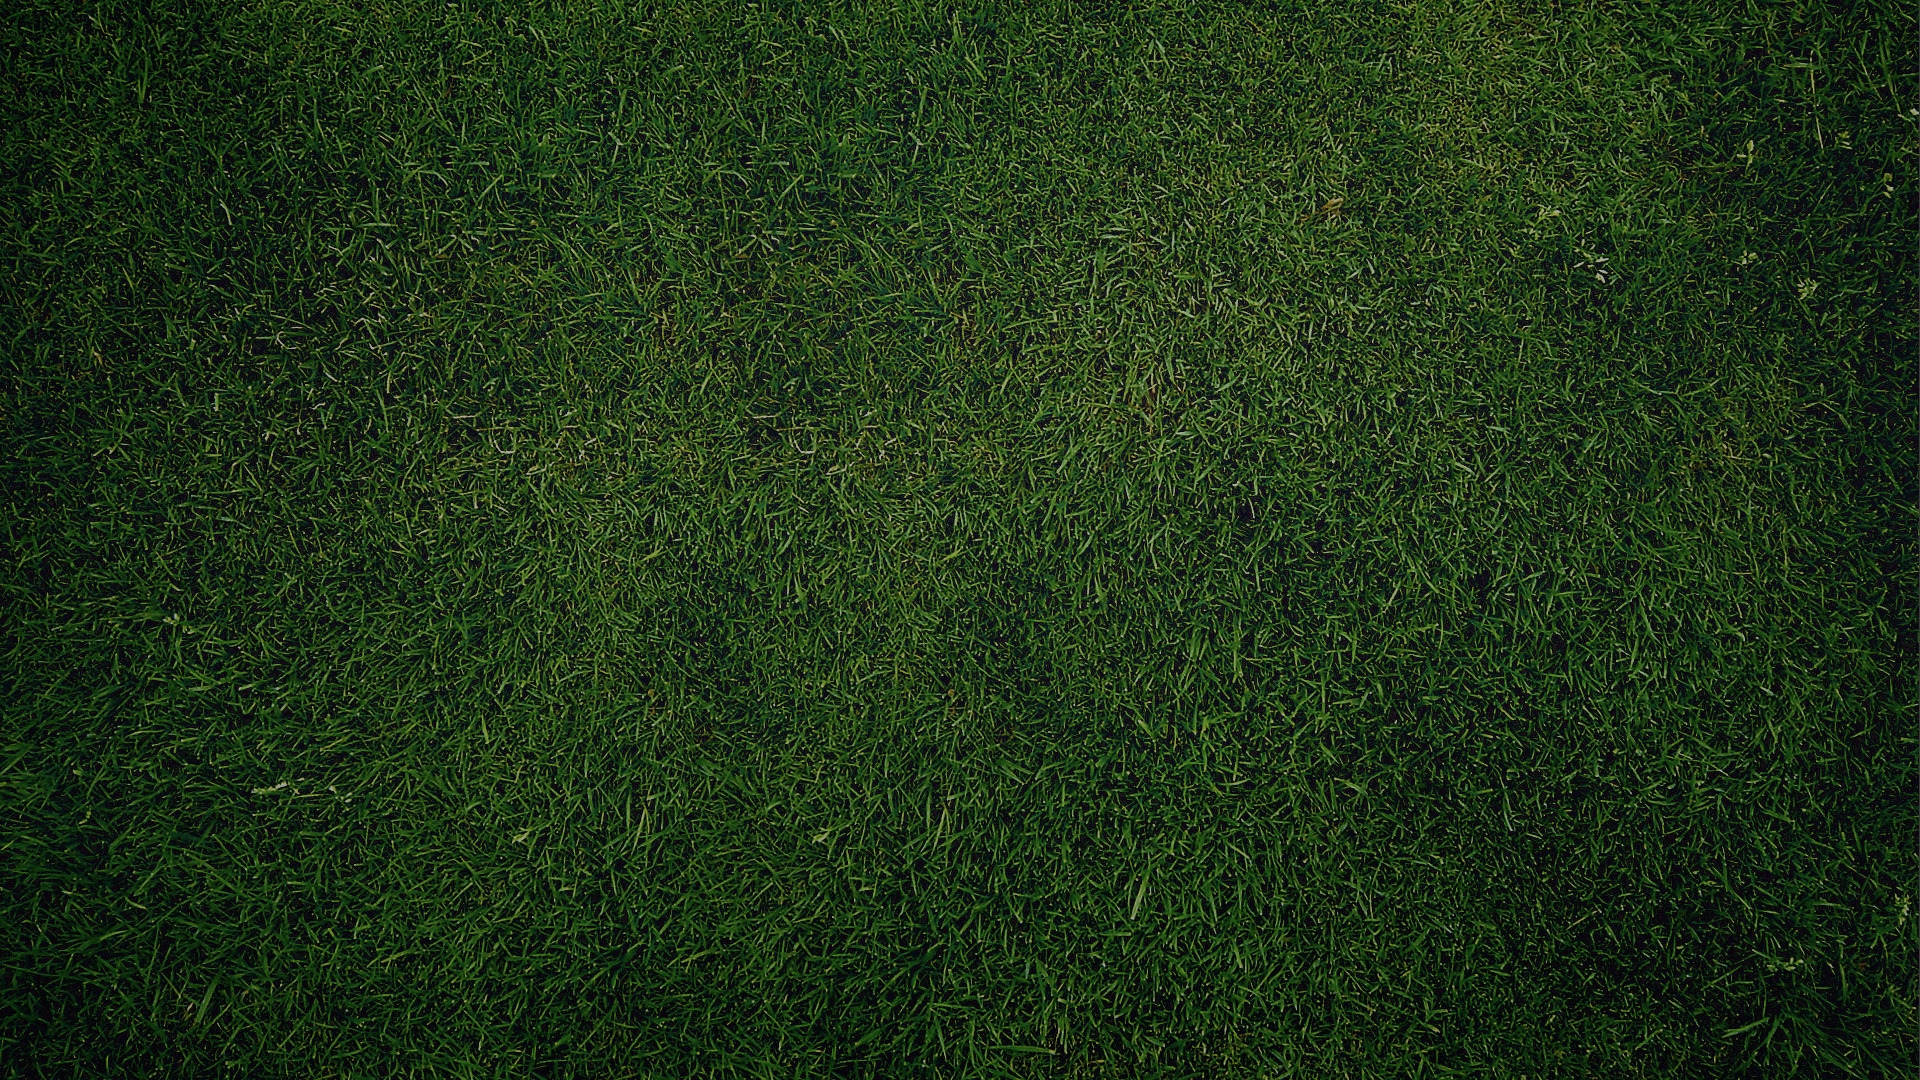 Green Grass for 1920 x 1080 HDTV 1080p resolution